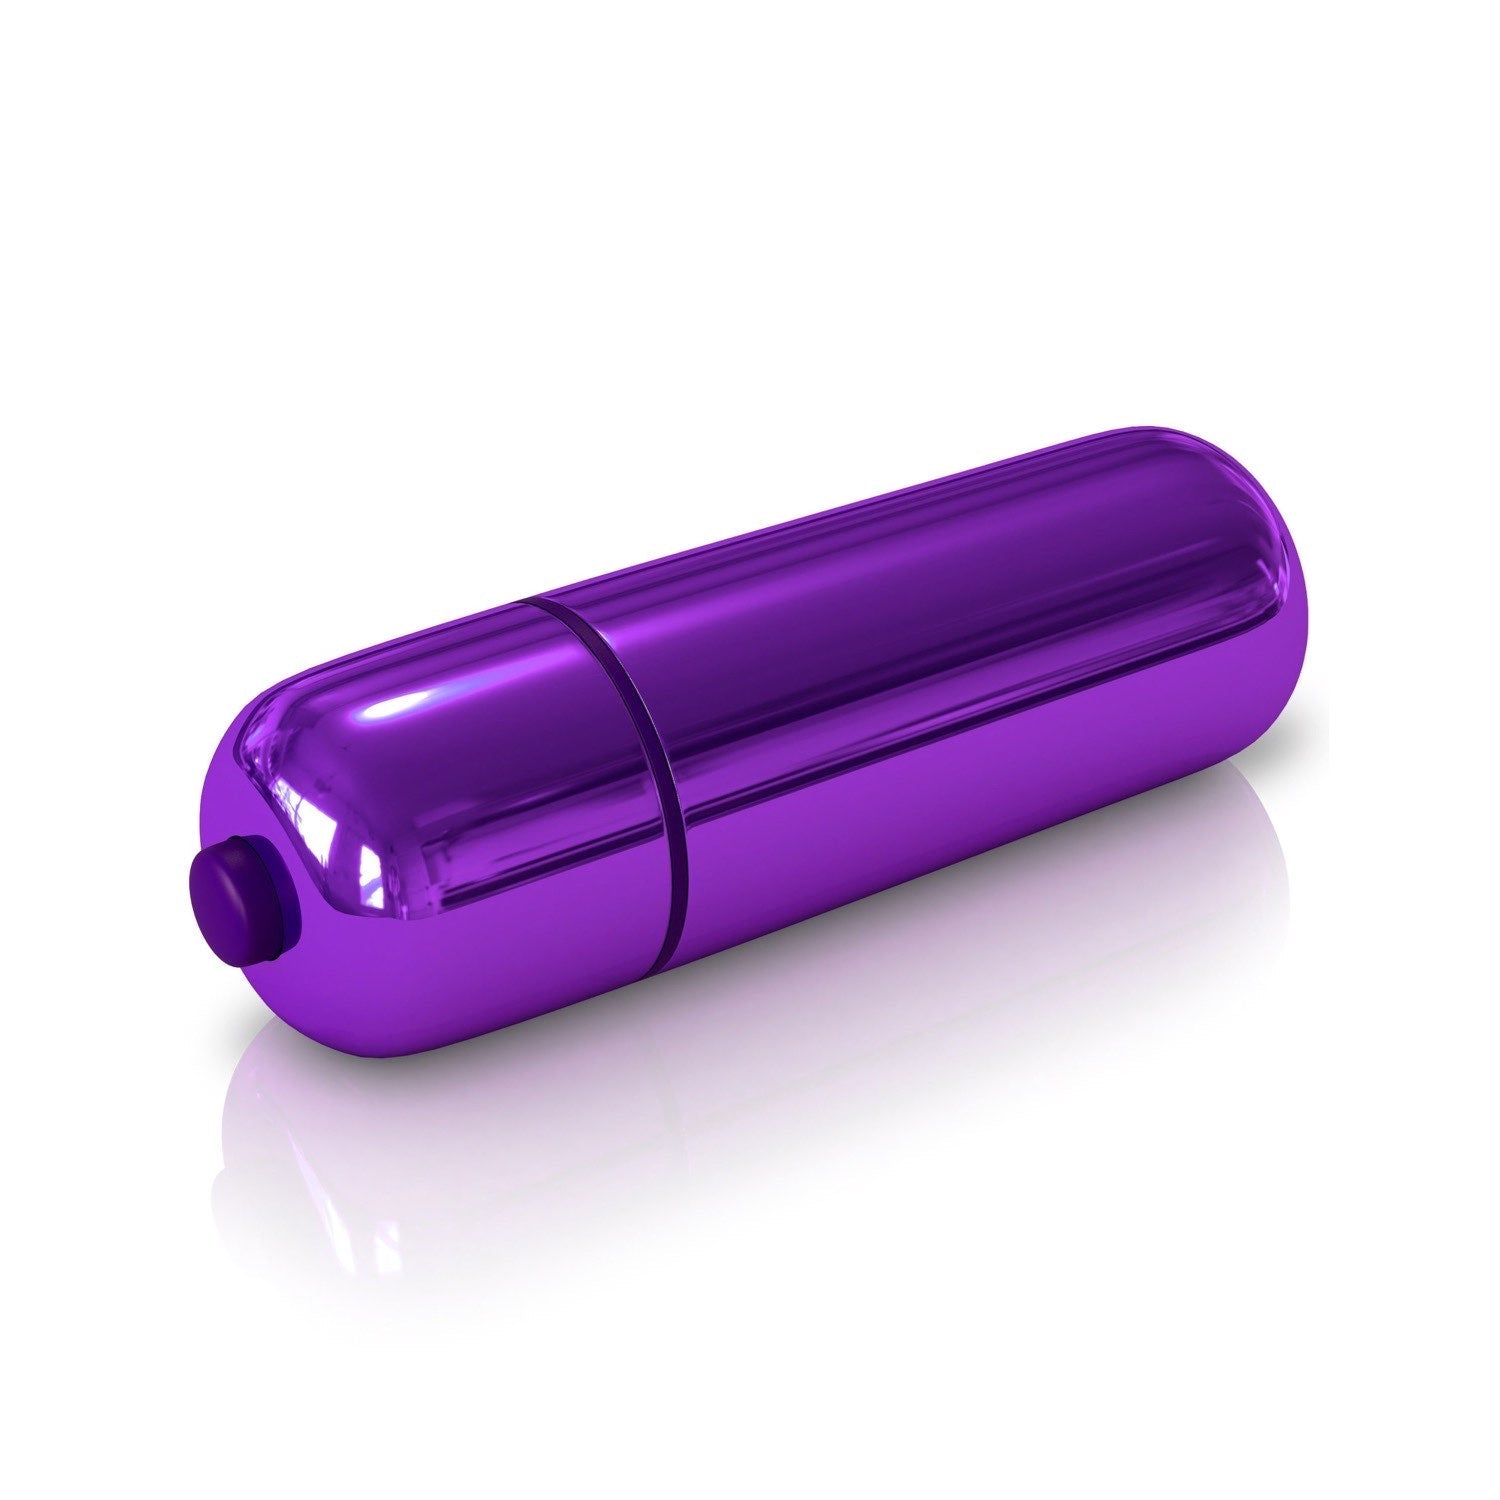 经典 Pocket Bullet - 金属紫色 5.6 厘米子弹头 by Pipedream